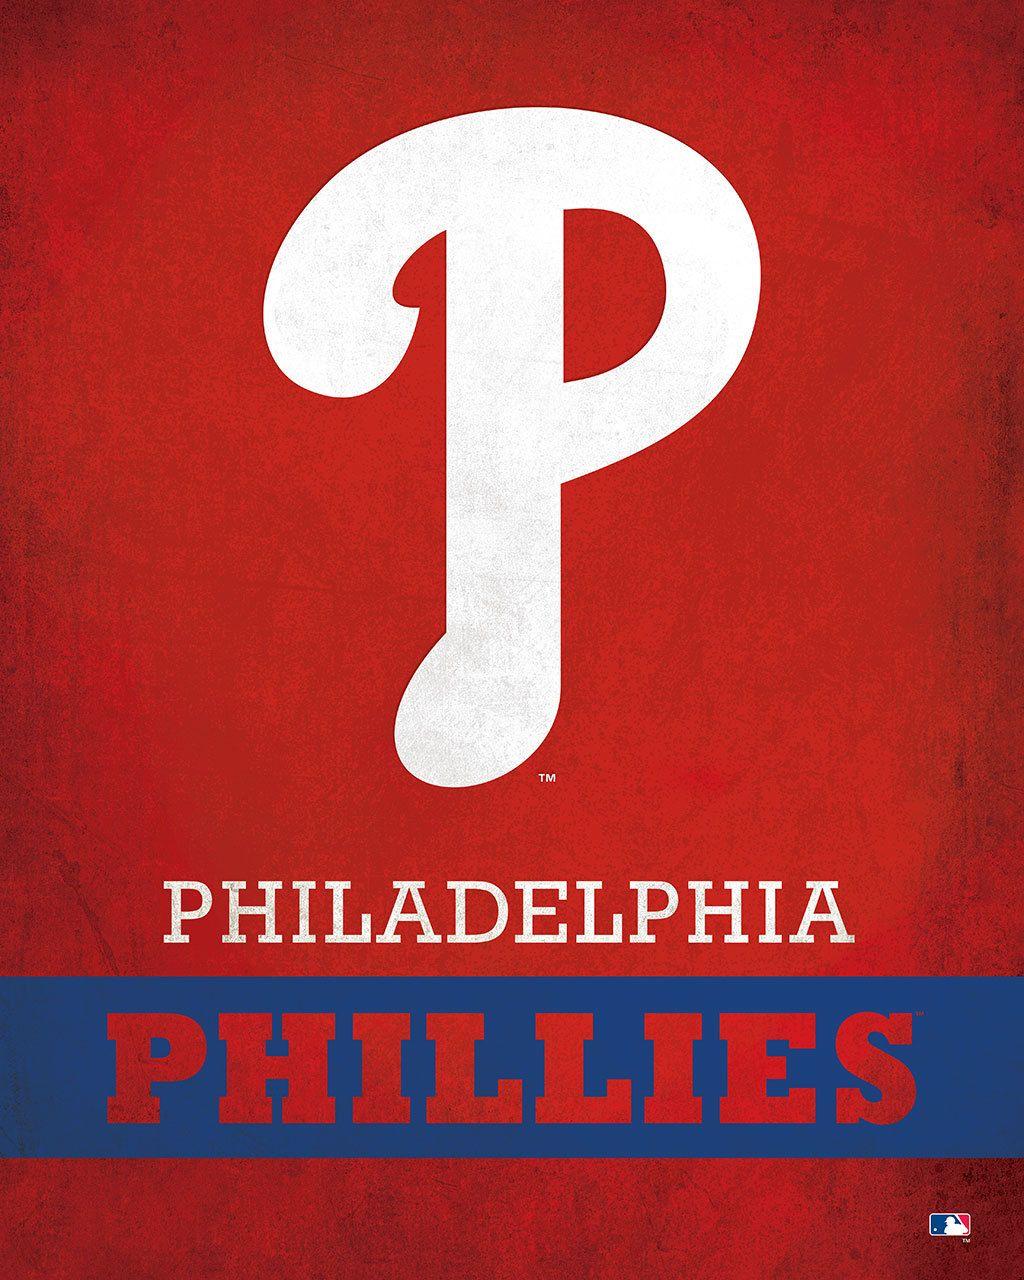 Phillies Logo - Philadelphia Phillies Logo - ScoreArt